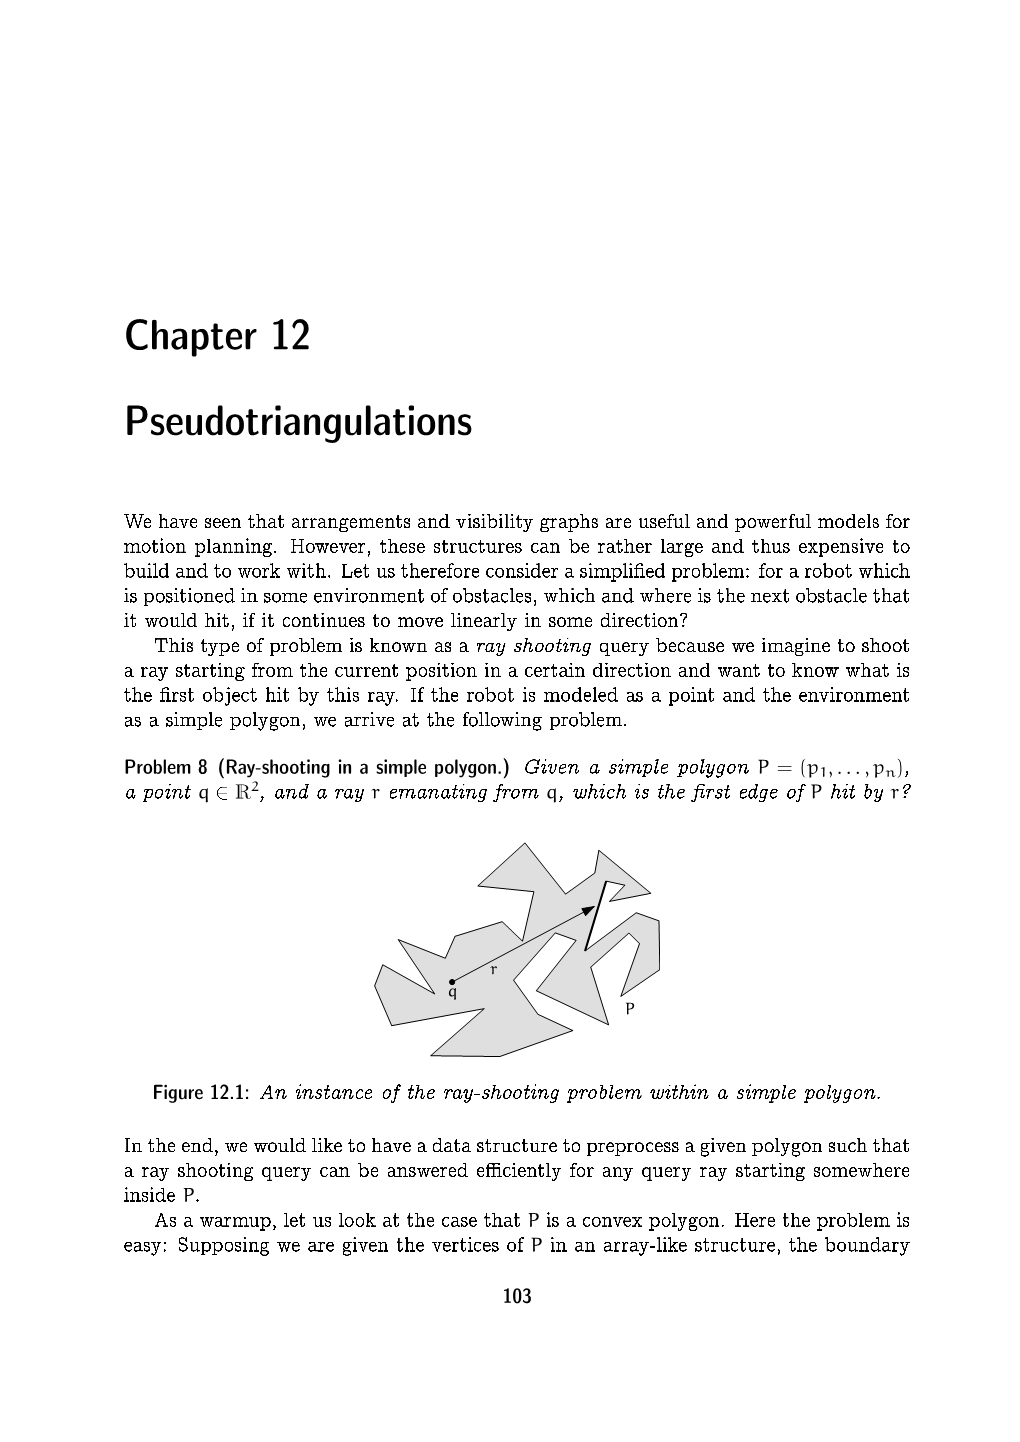 Chapter 12 Pseudotriangulations